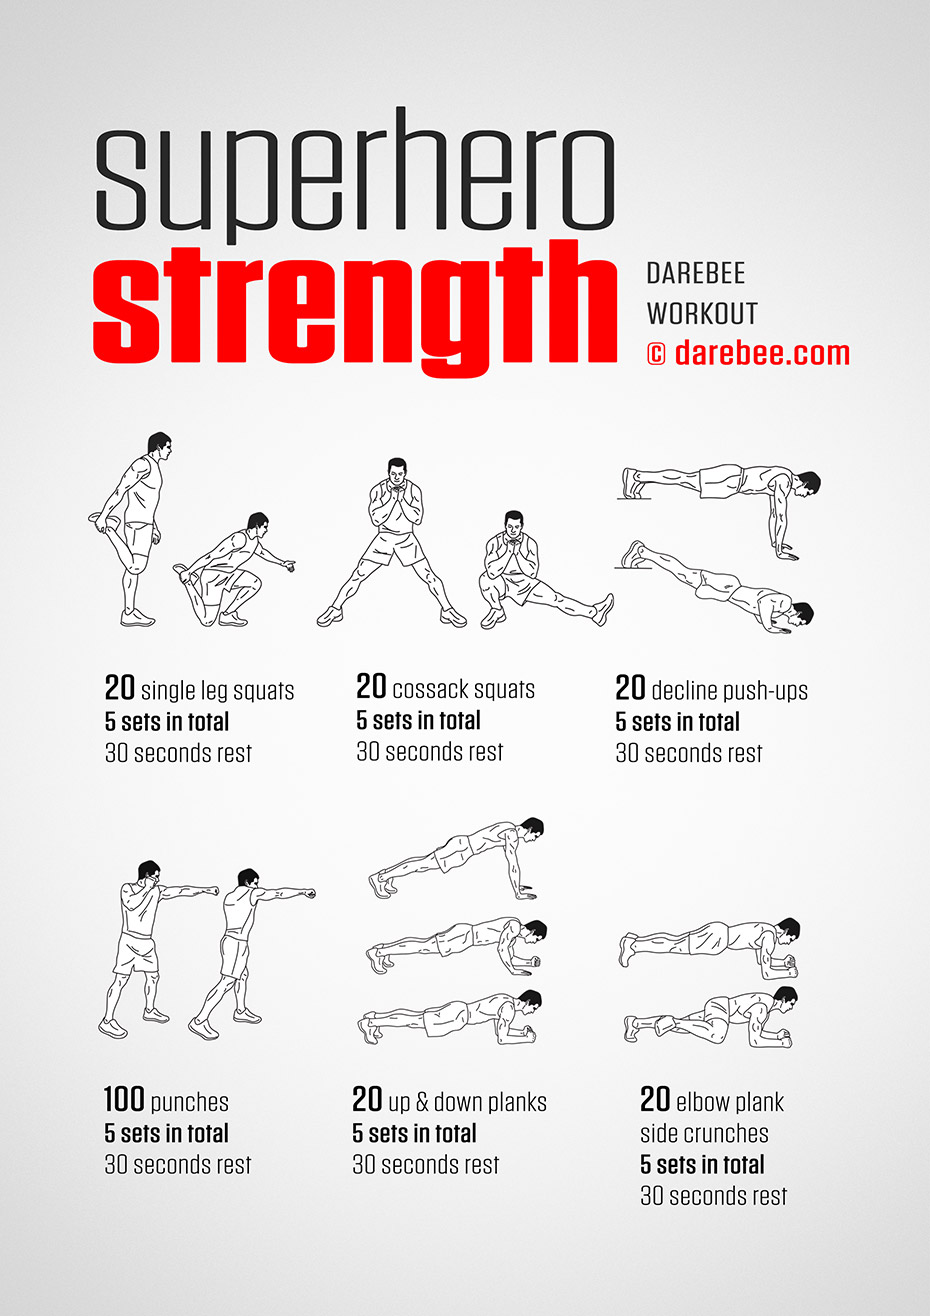 Superhero Strength free workout from Darebee